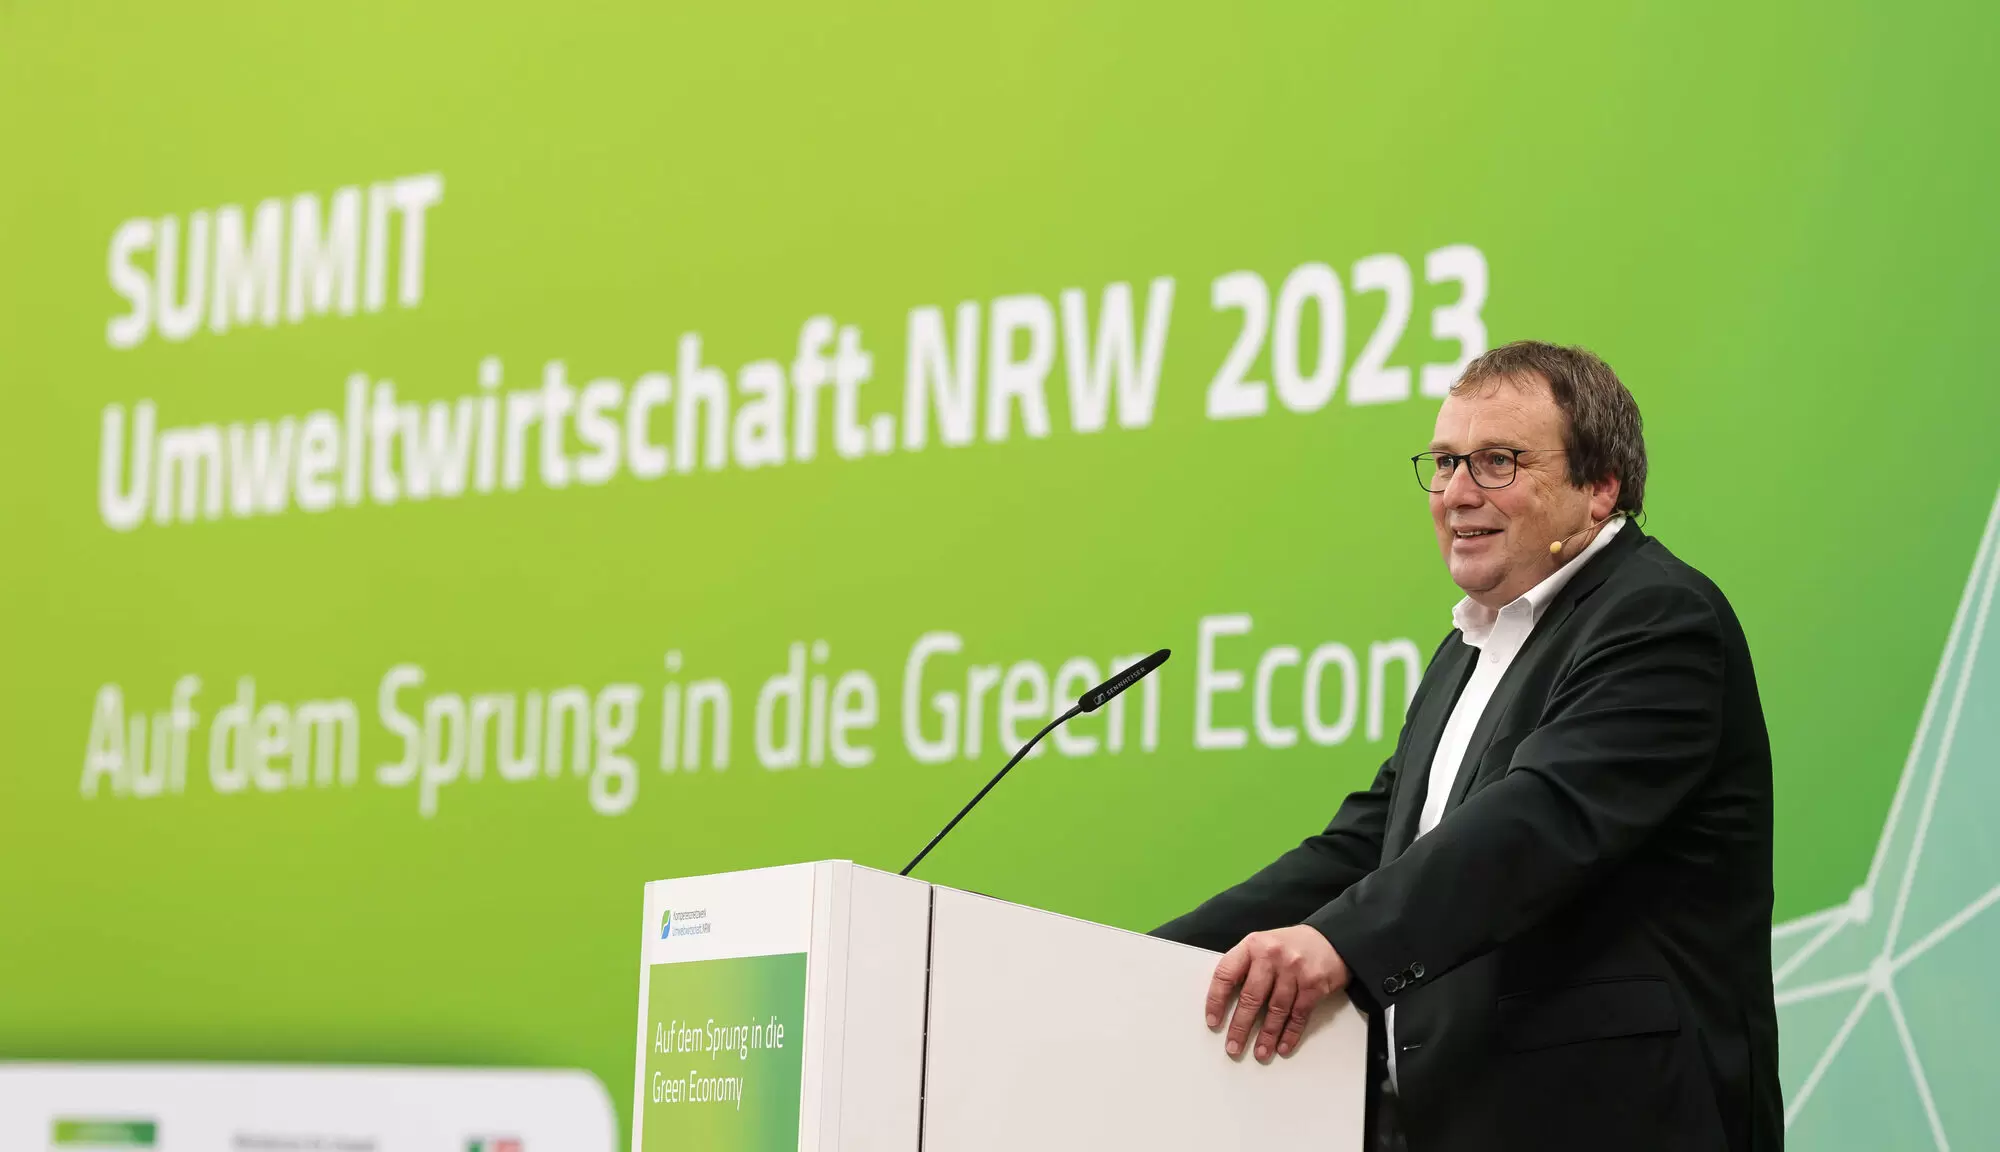 SUMMIT Umweltwirtschaft.NRW 2023 Copyright: Ute Grabowsky (phototek)